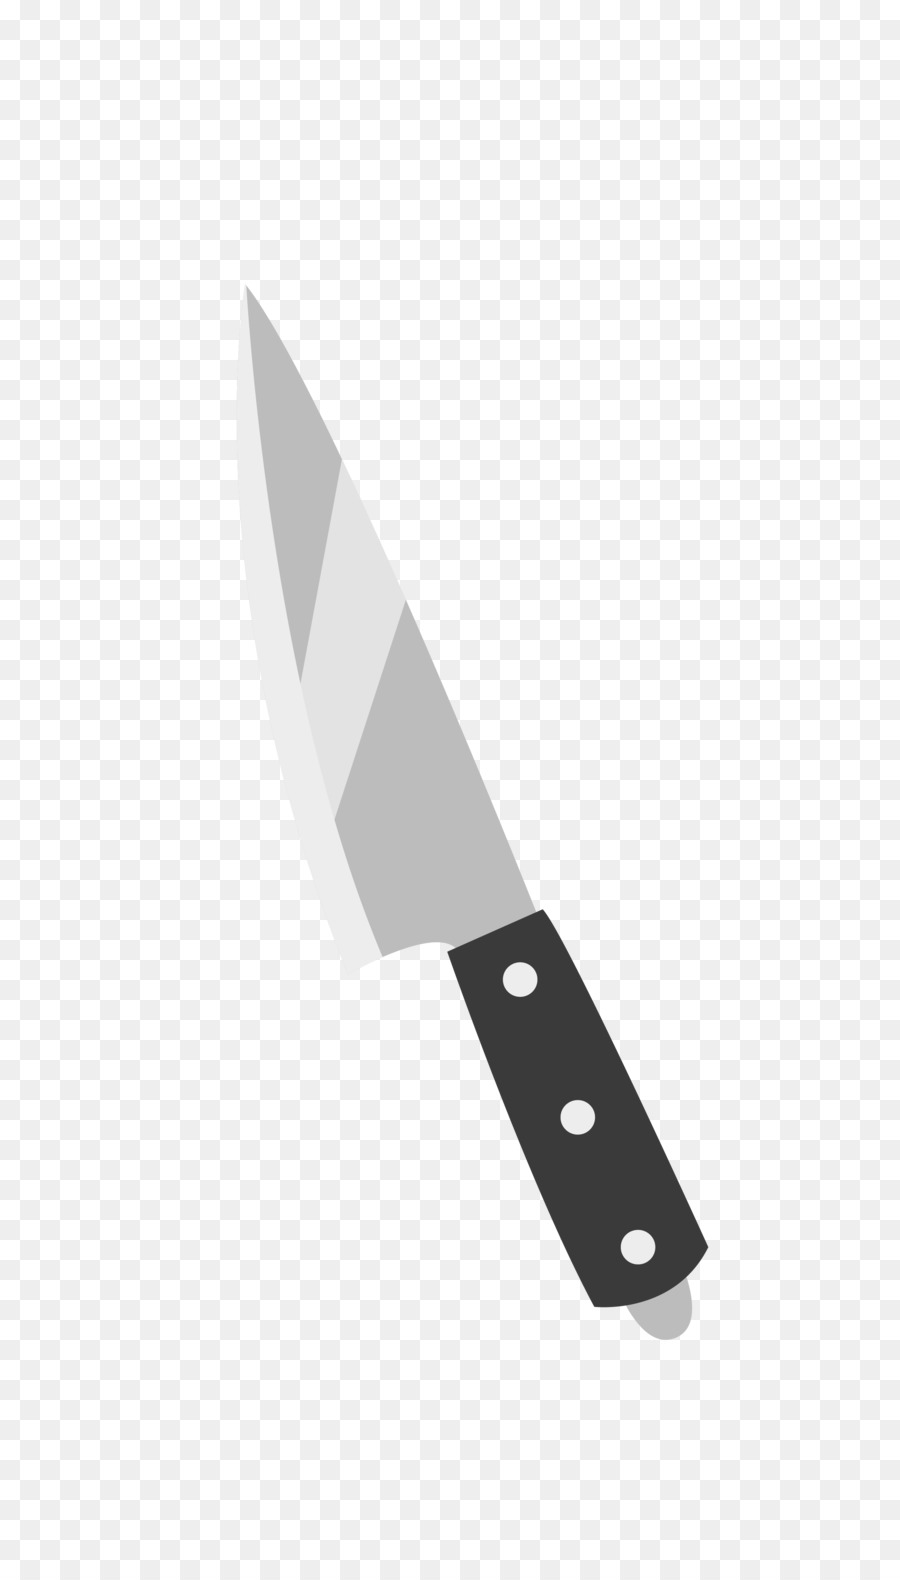 Kitchen knife Throwing knife - Vector Silver Knife Fruit Knife png download - 2263*3927 - Free Transparent Knife png Download.